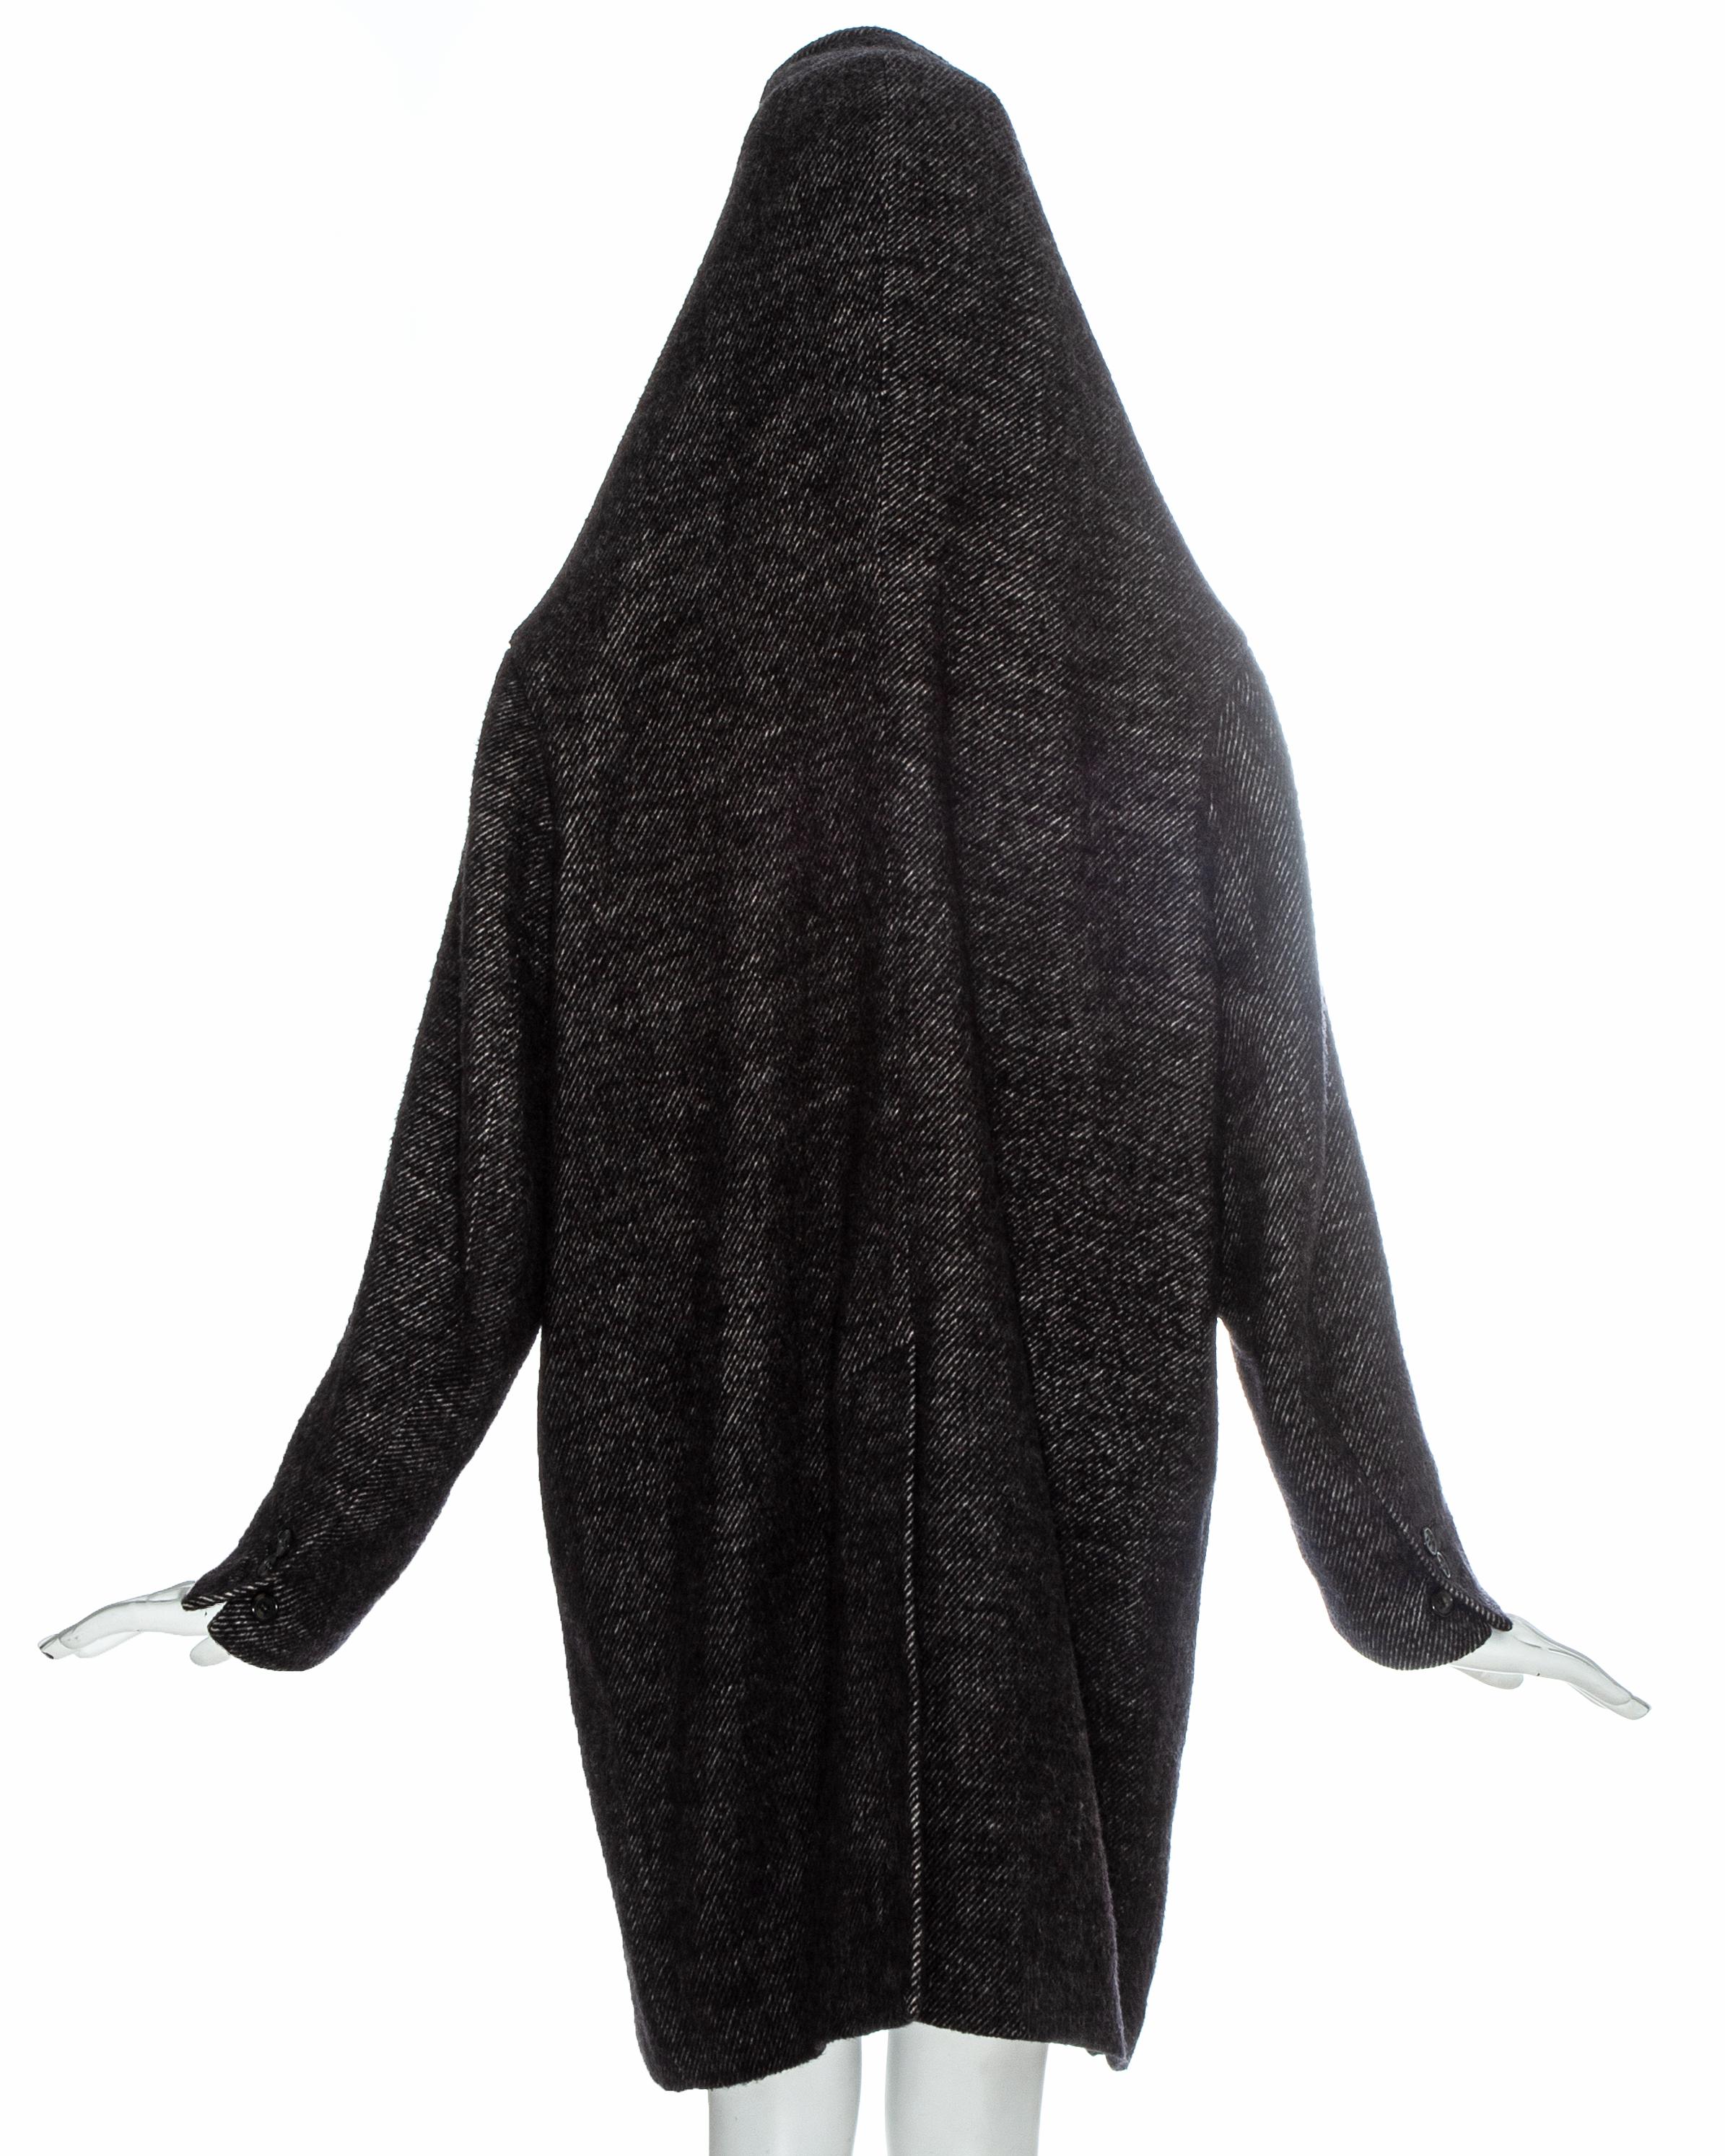 Women's Martin Margiela dark grey wool coat with an elongated hood-collar, fw 2005 For Sale